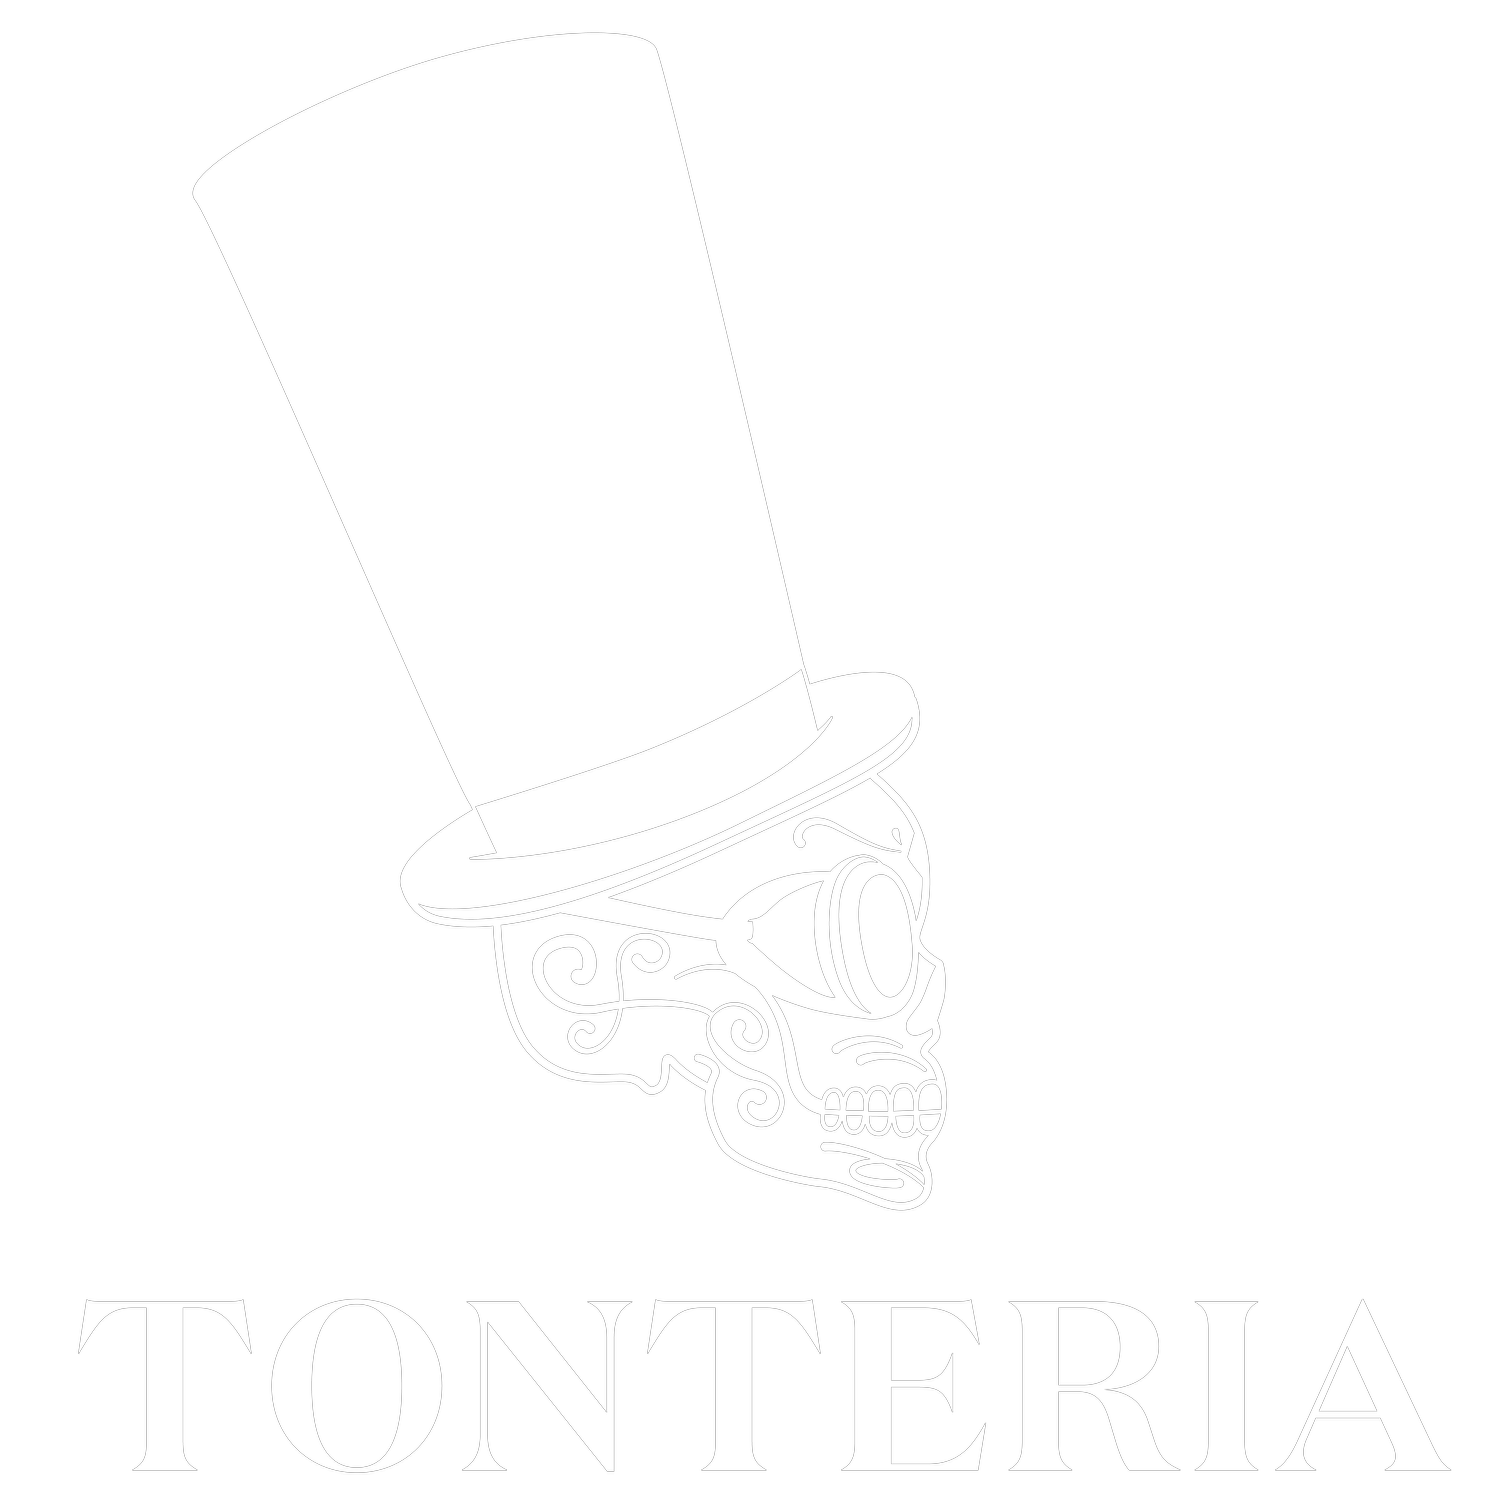 Tonteria - a Nightclub based in Chelsea, London